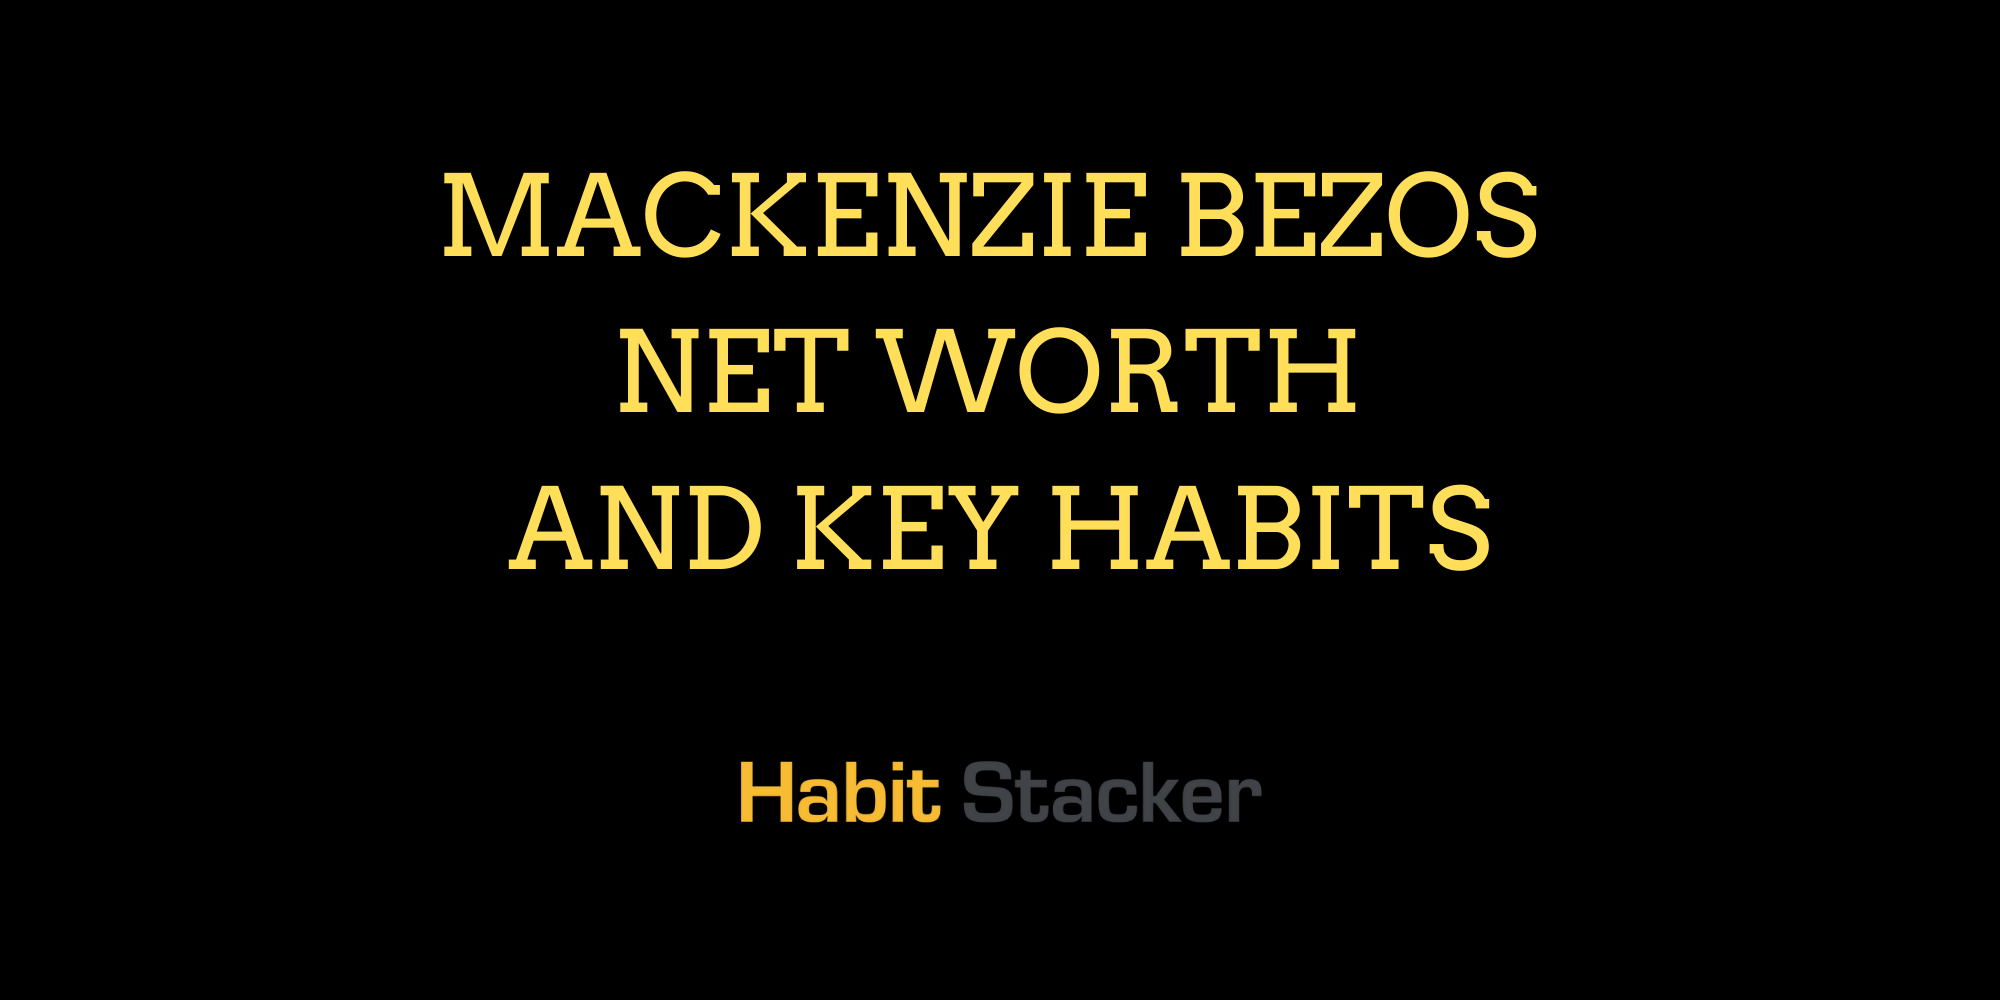 Mackenzie Bezos Net Worth and Key Habits